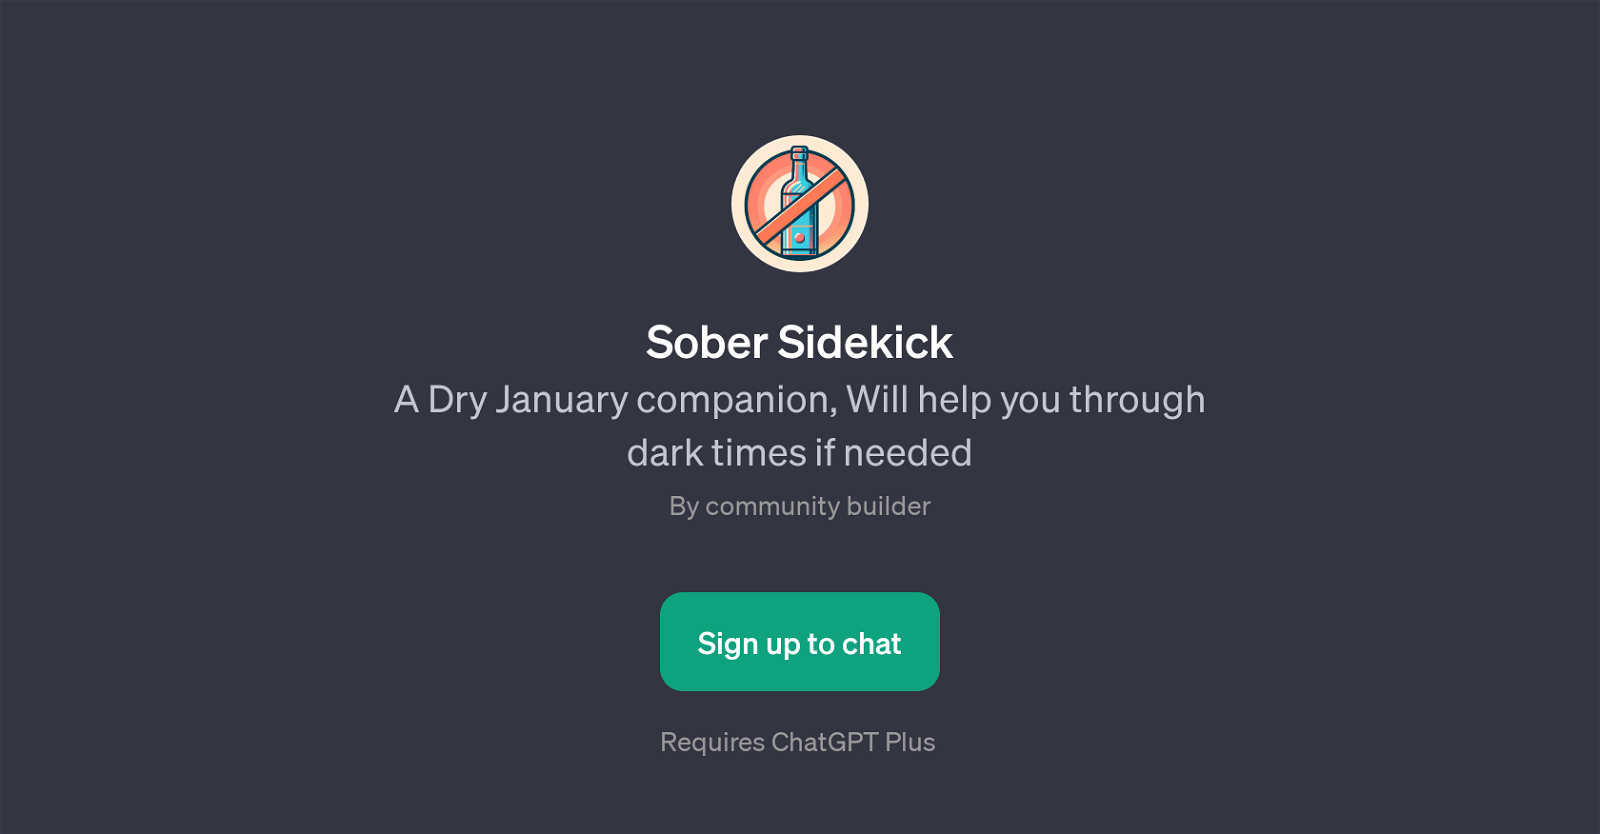 Sober Sidekick website